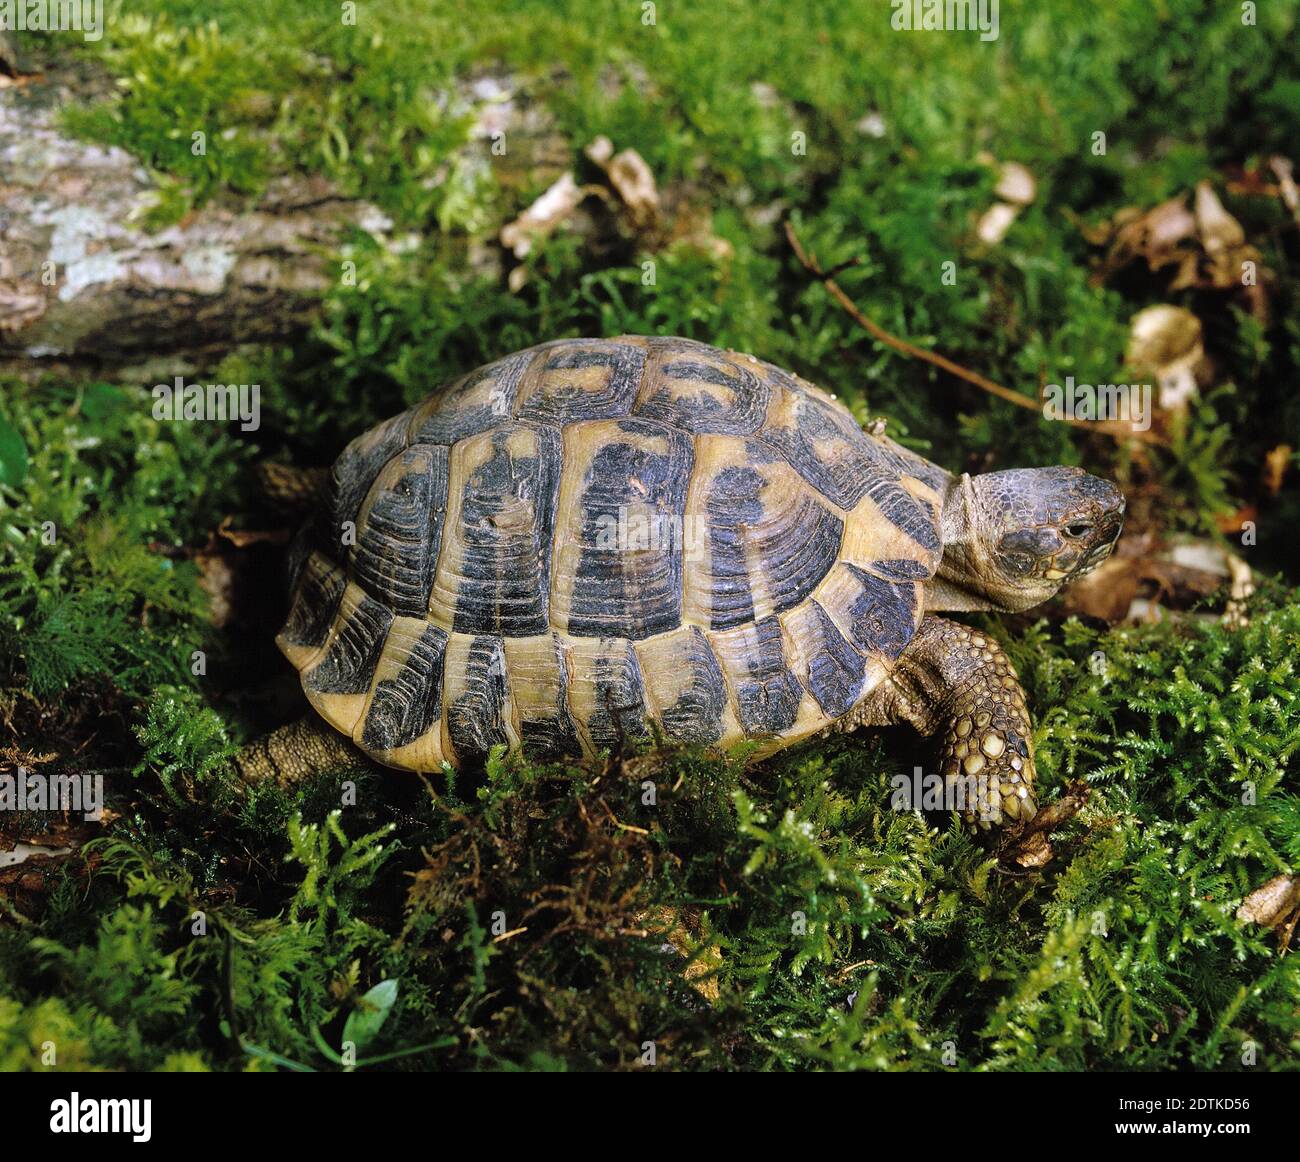 Hermann's Tortoise, testudo hermanni, standing on Moss Stock Photo